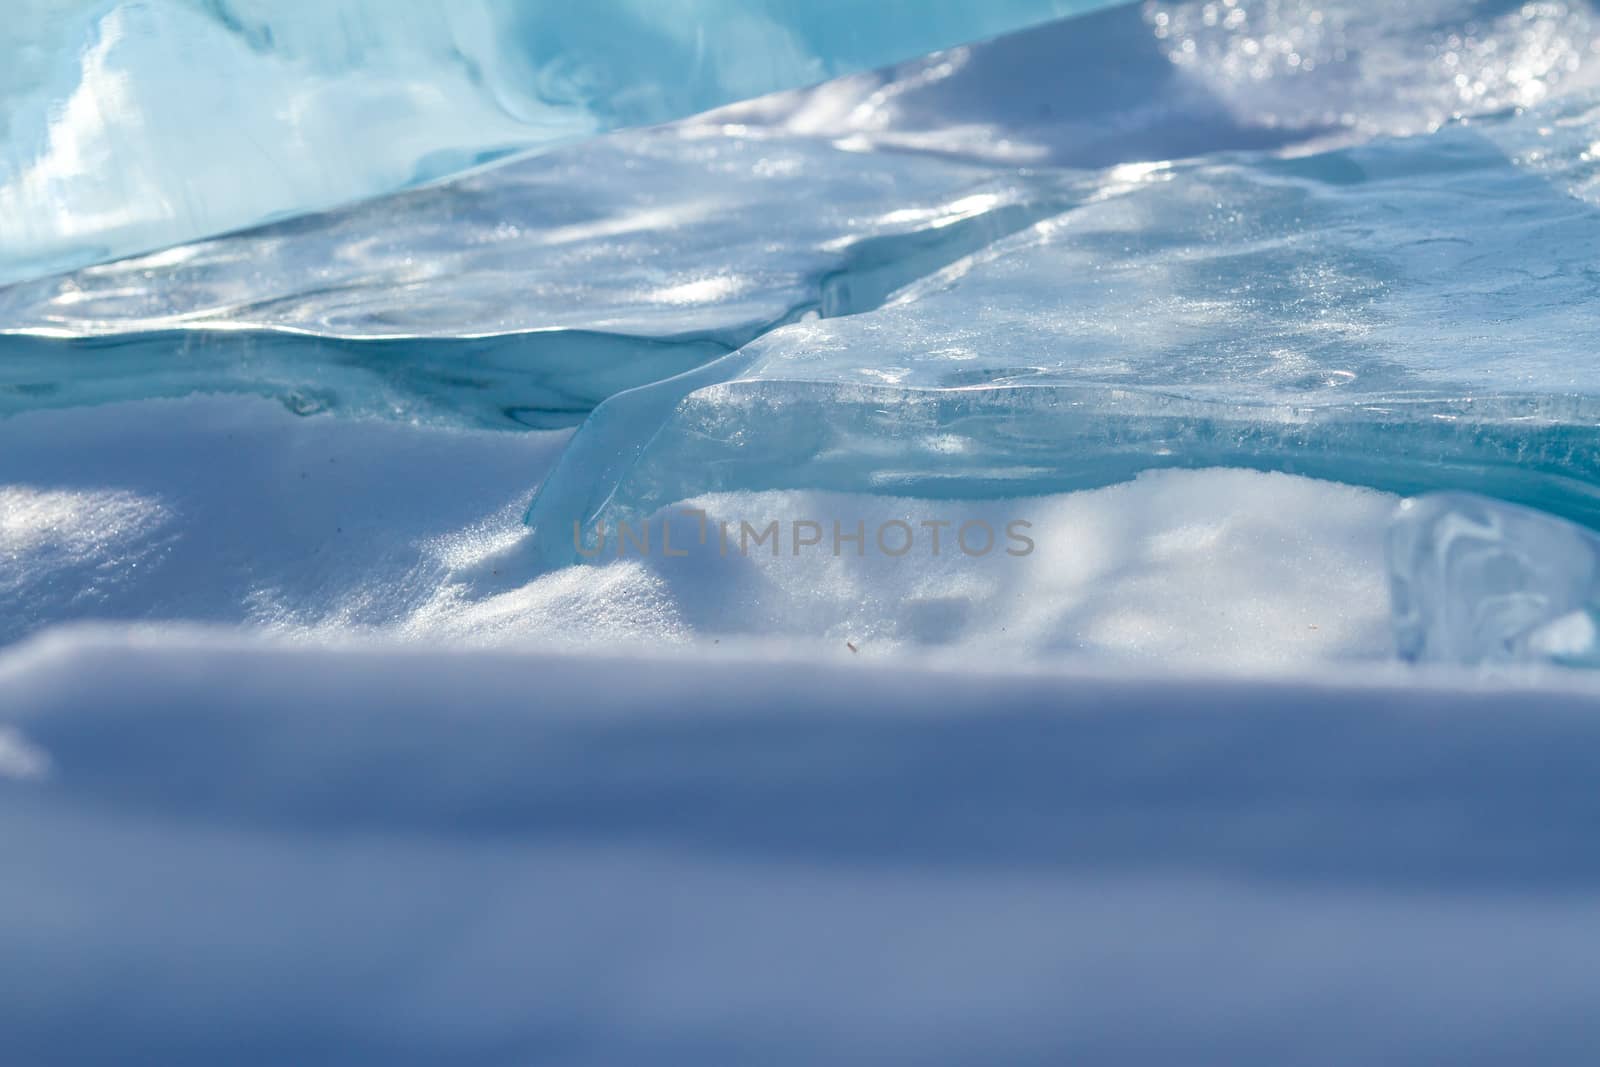 Bloks of ice on Baikal lake, March 2013